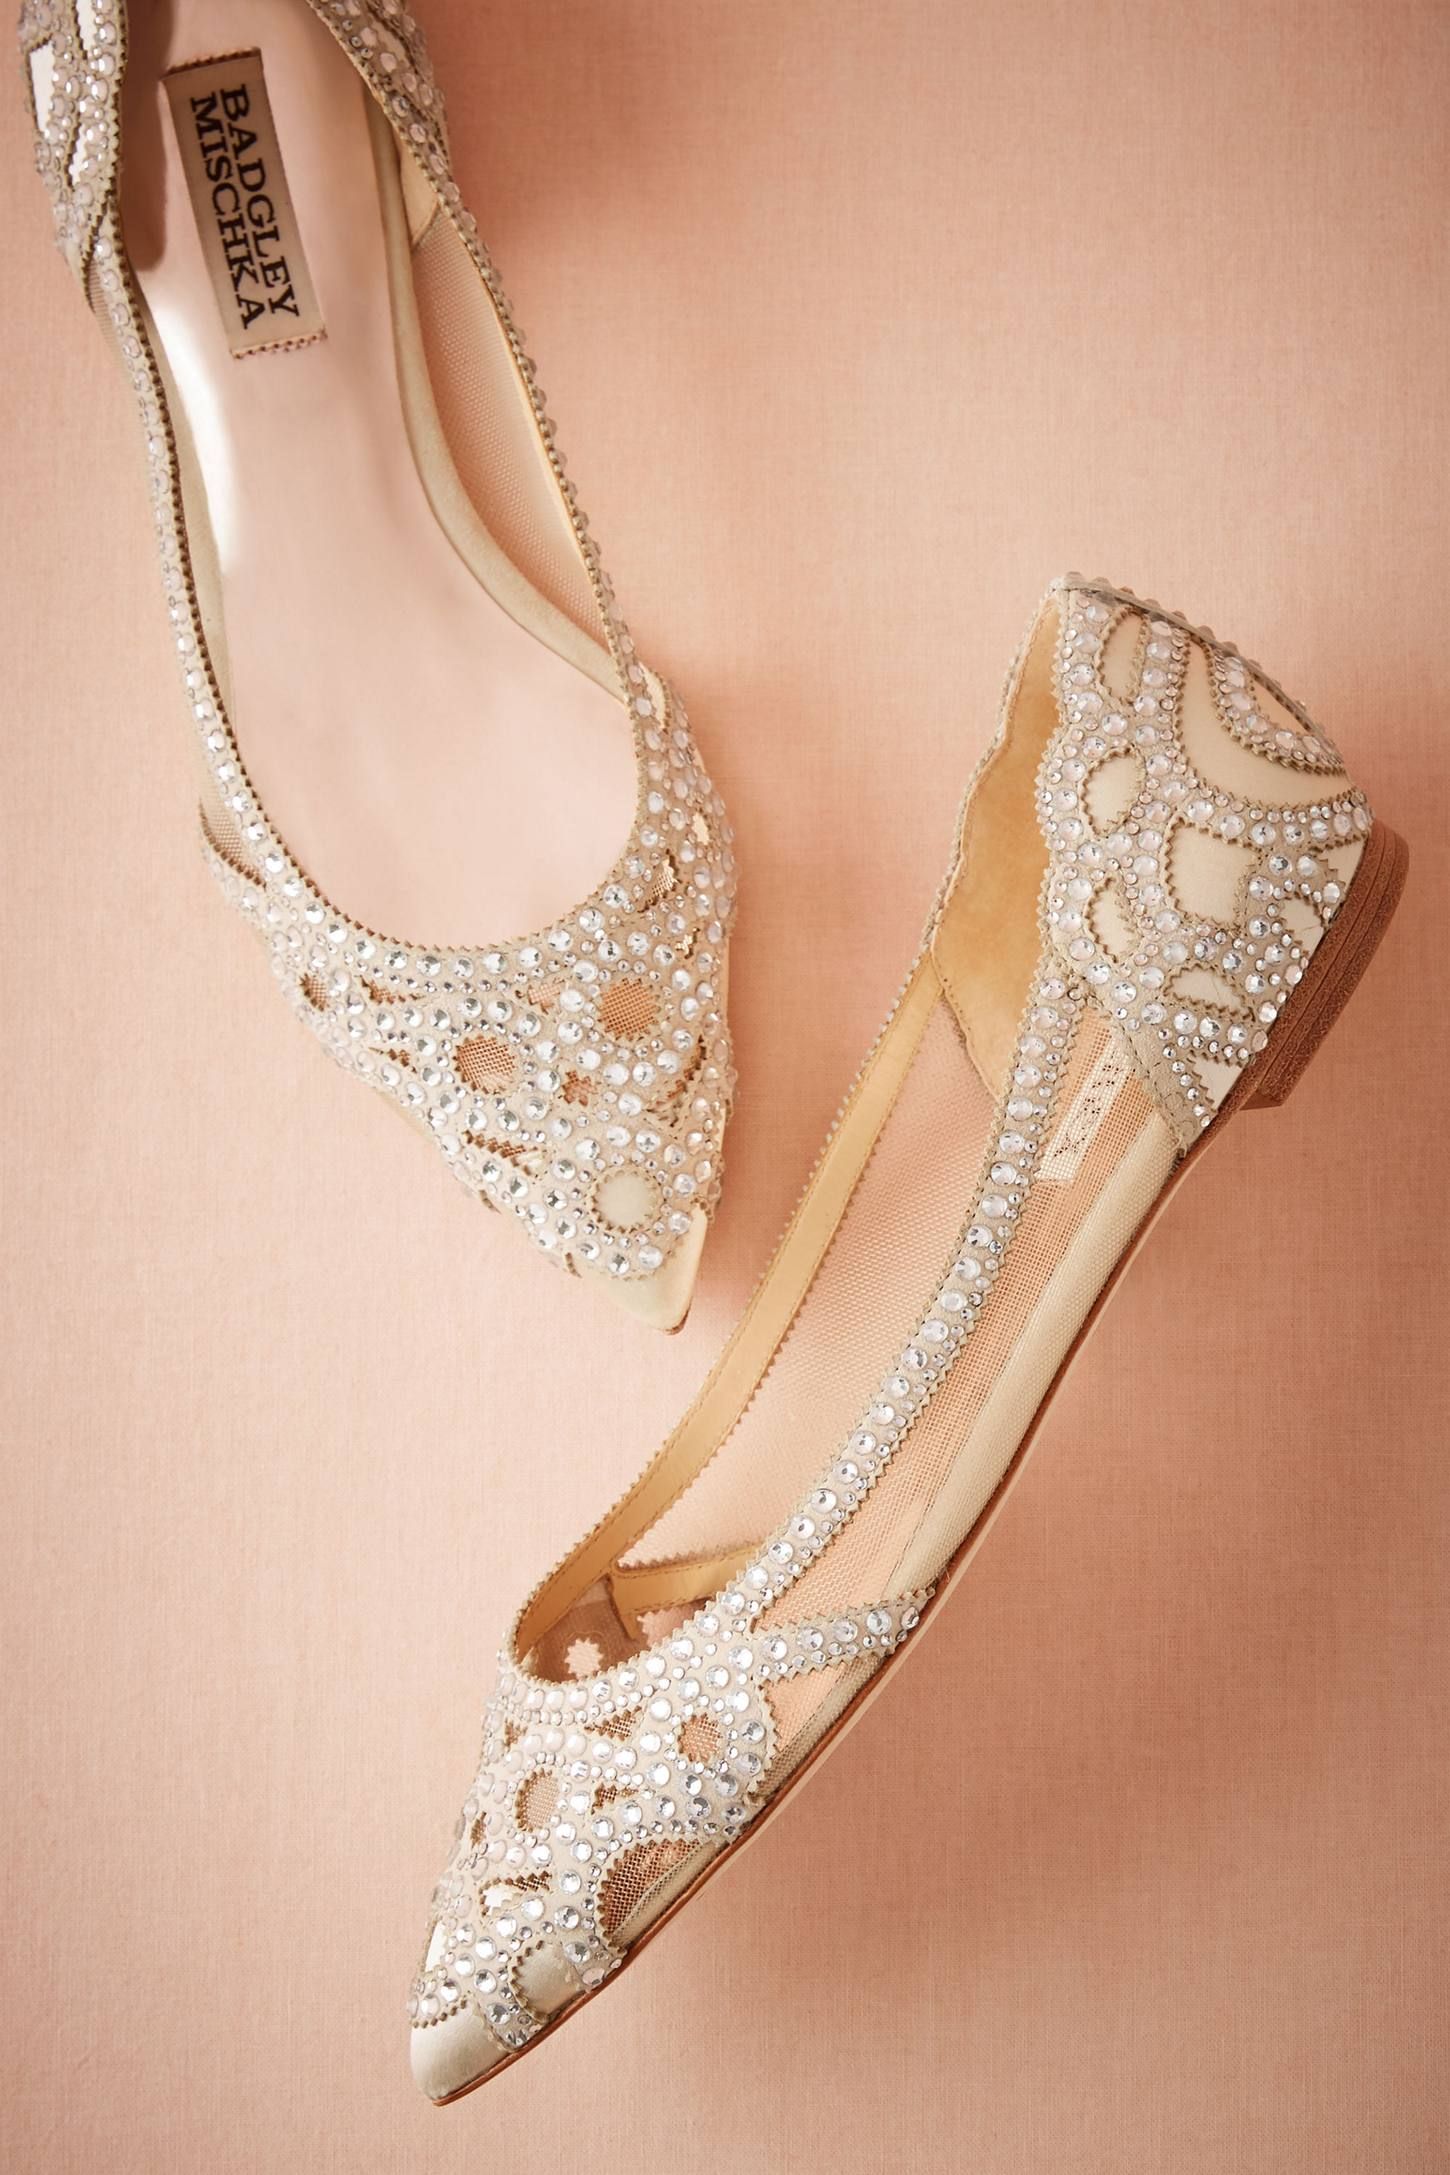 Silver Rhinestone Strappy Sandals Stiletto Heel Open Toe Sandals | Heels,  Stiletto heels, Silver strappy heels